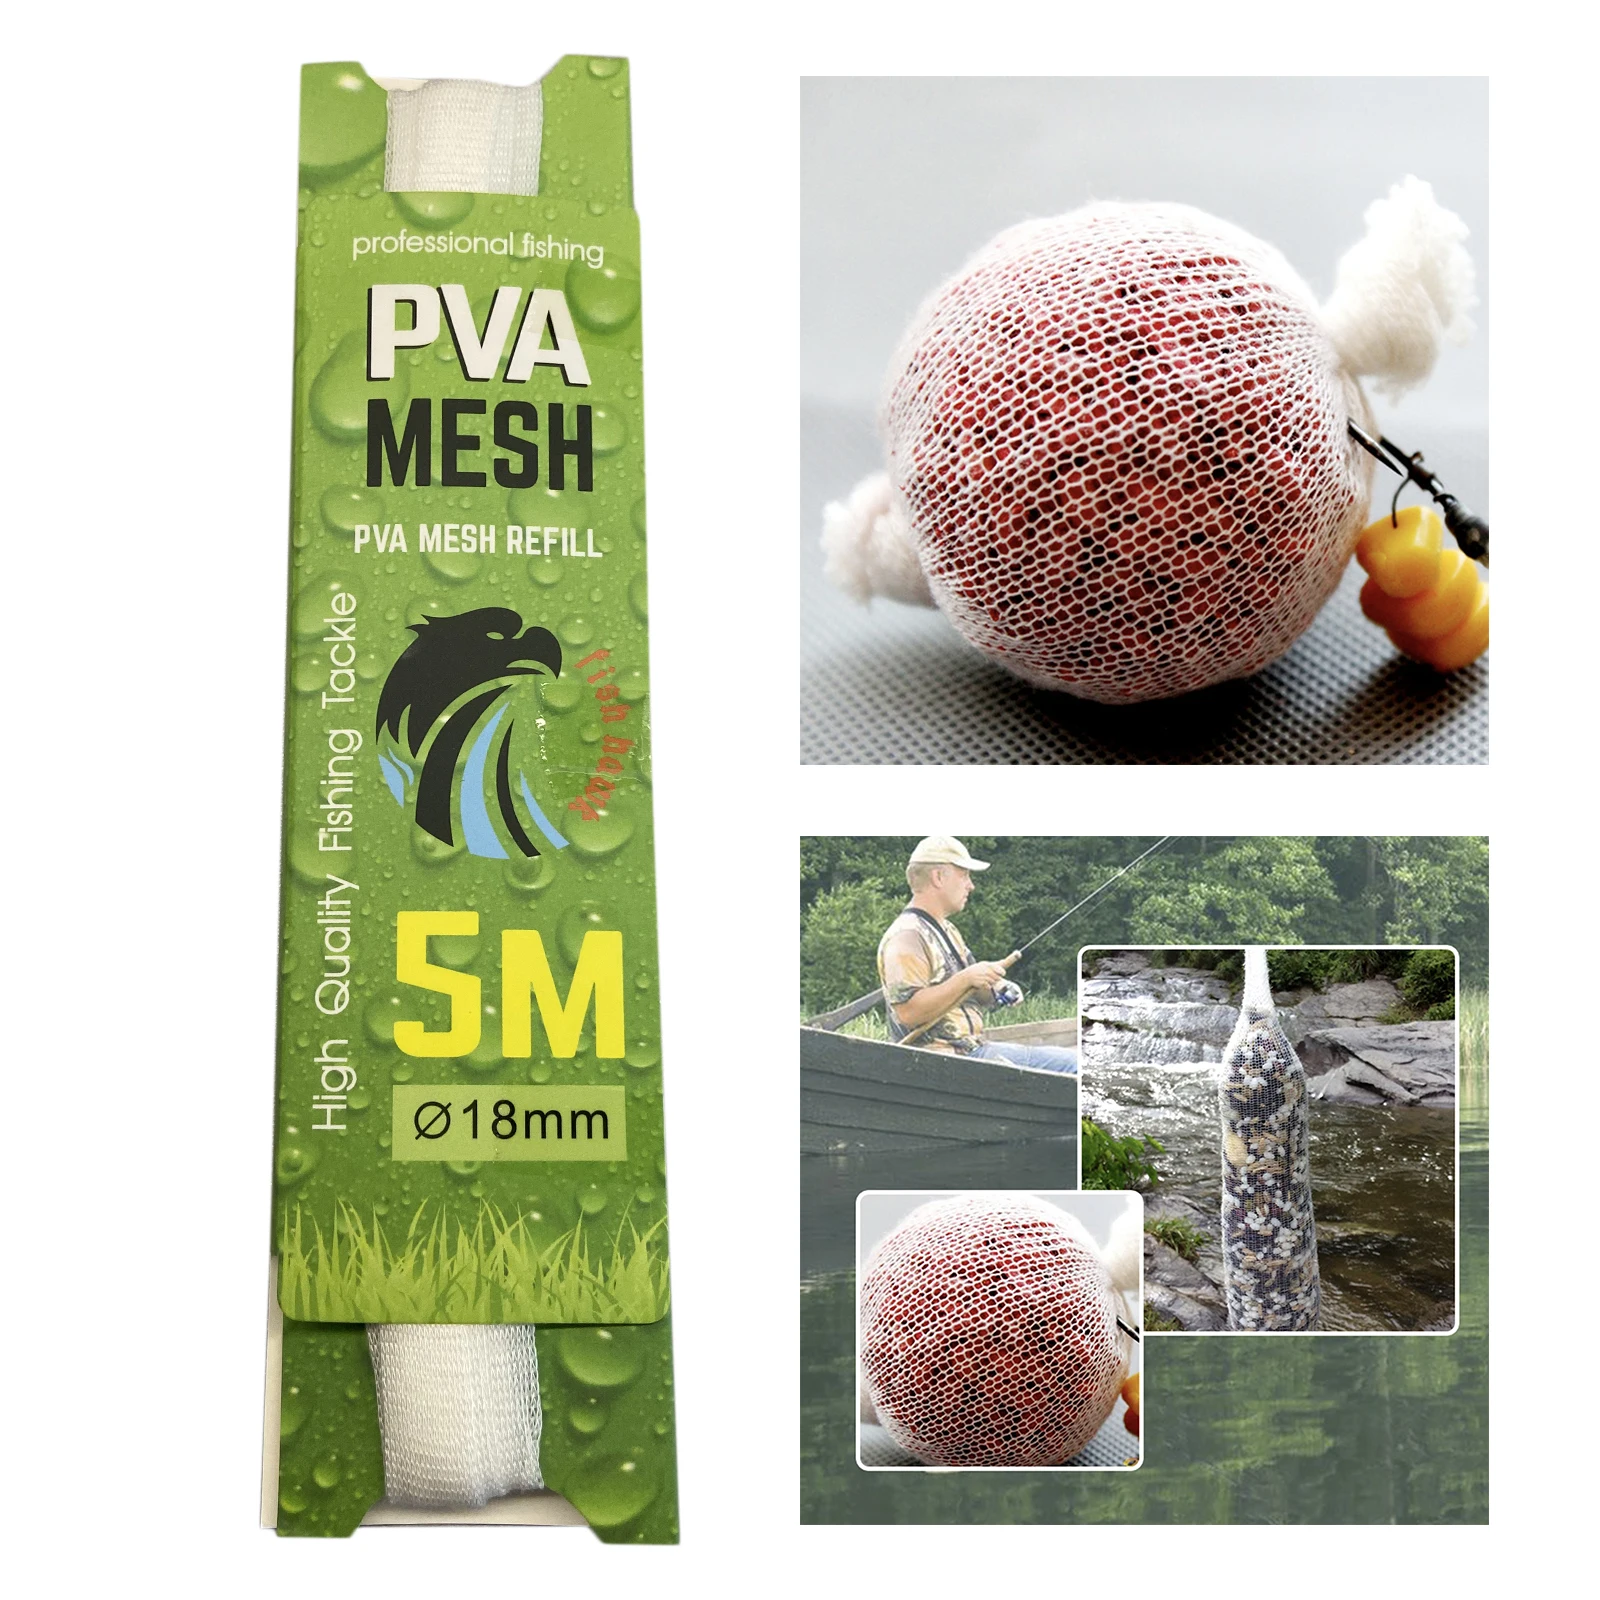 5m PVA Fishing Bait Bag Slow Dissolving Carp Lure Water Soluble Mesh Tube Eco-Friendly Fishing Lure Stocking Wrap Net Bag